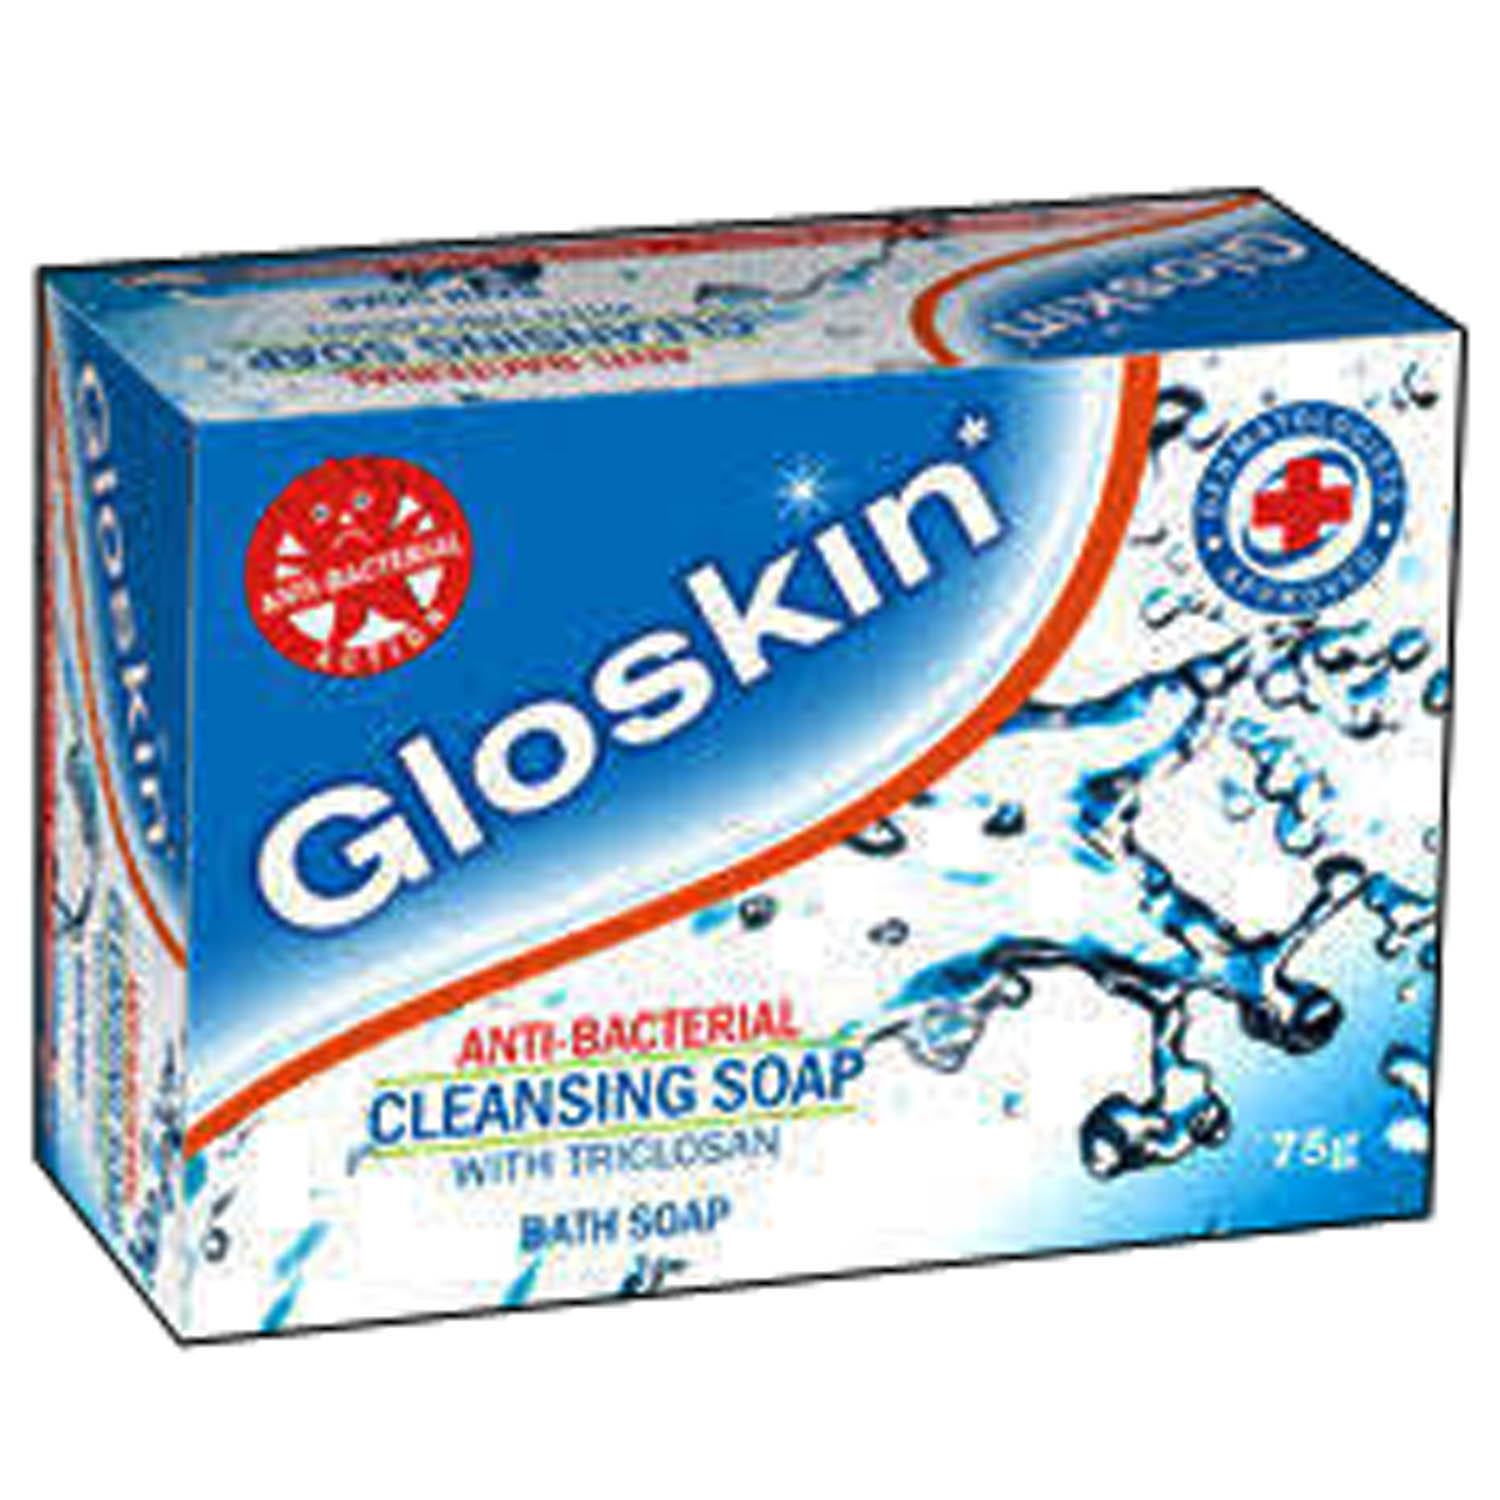 Gloskin Soap, 75 gm, Pack of 1 